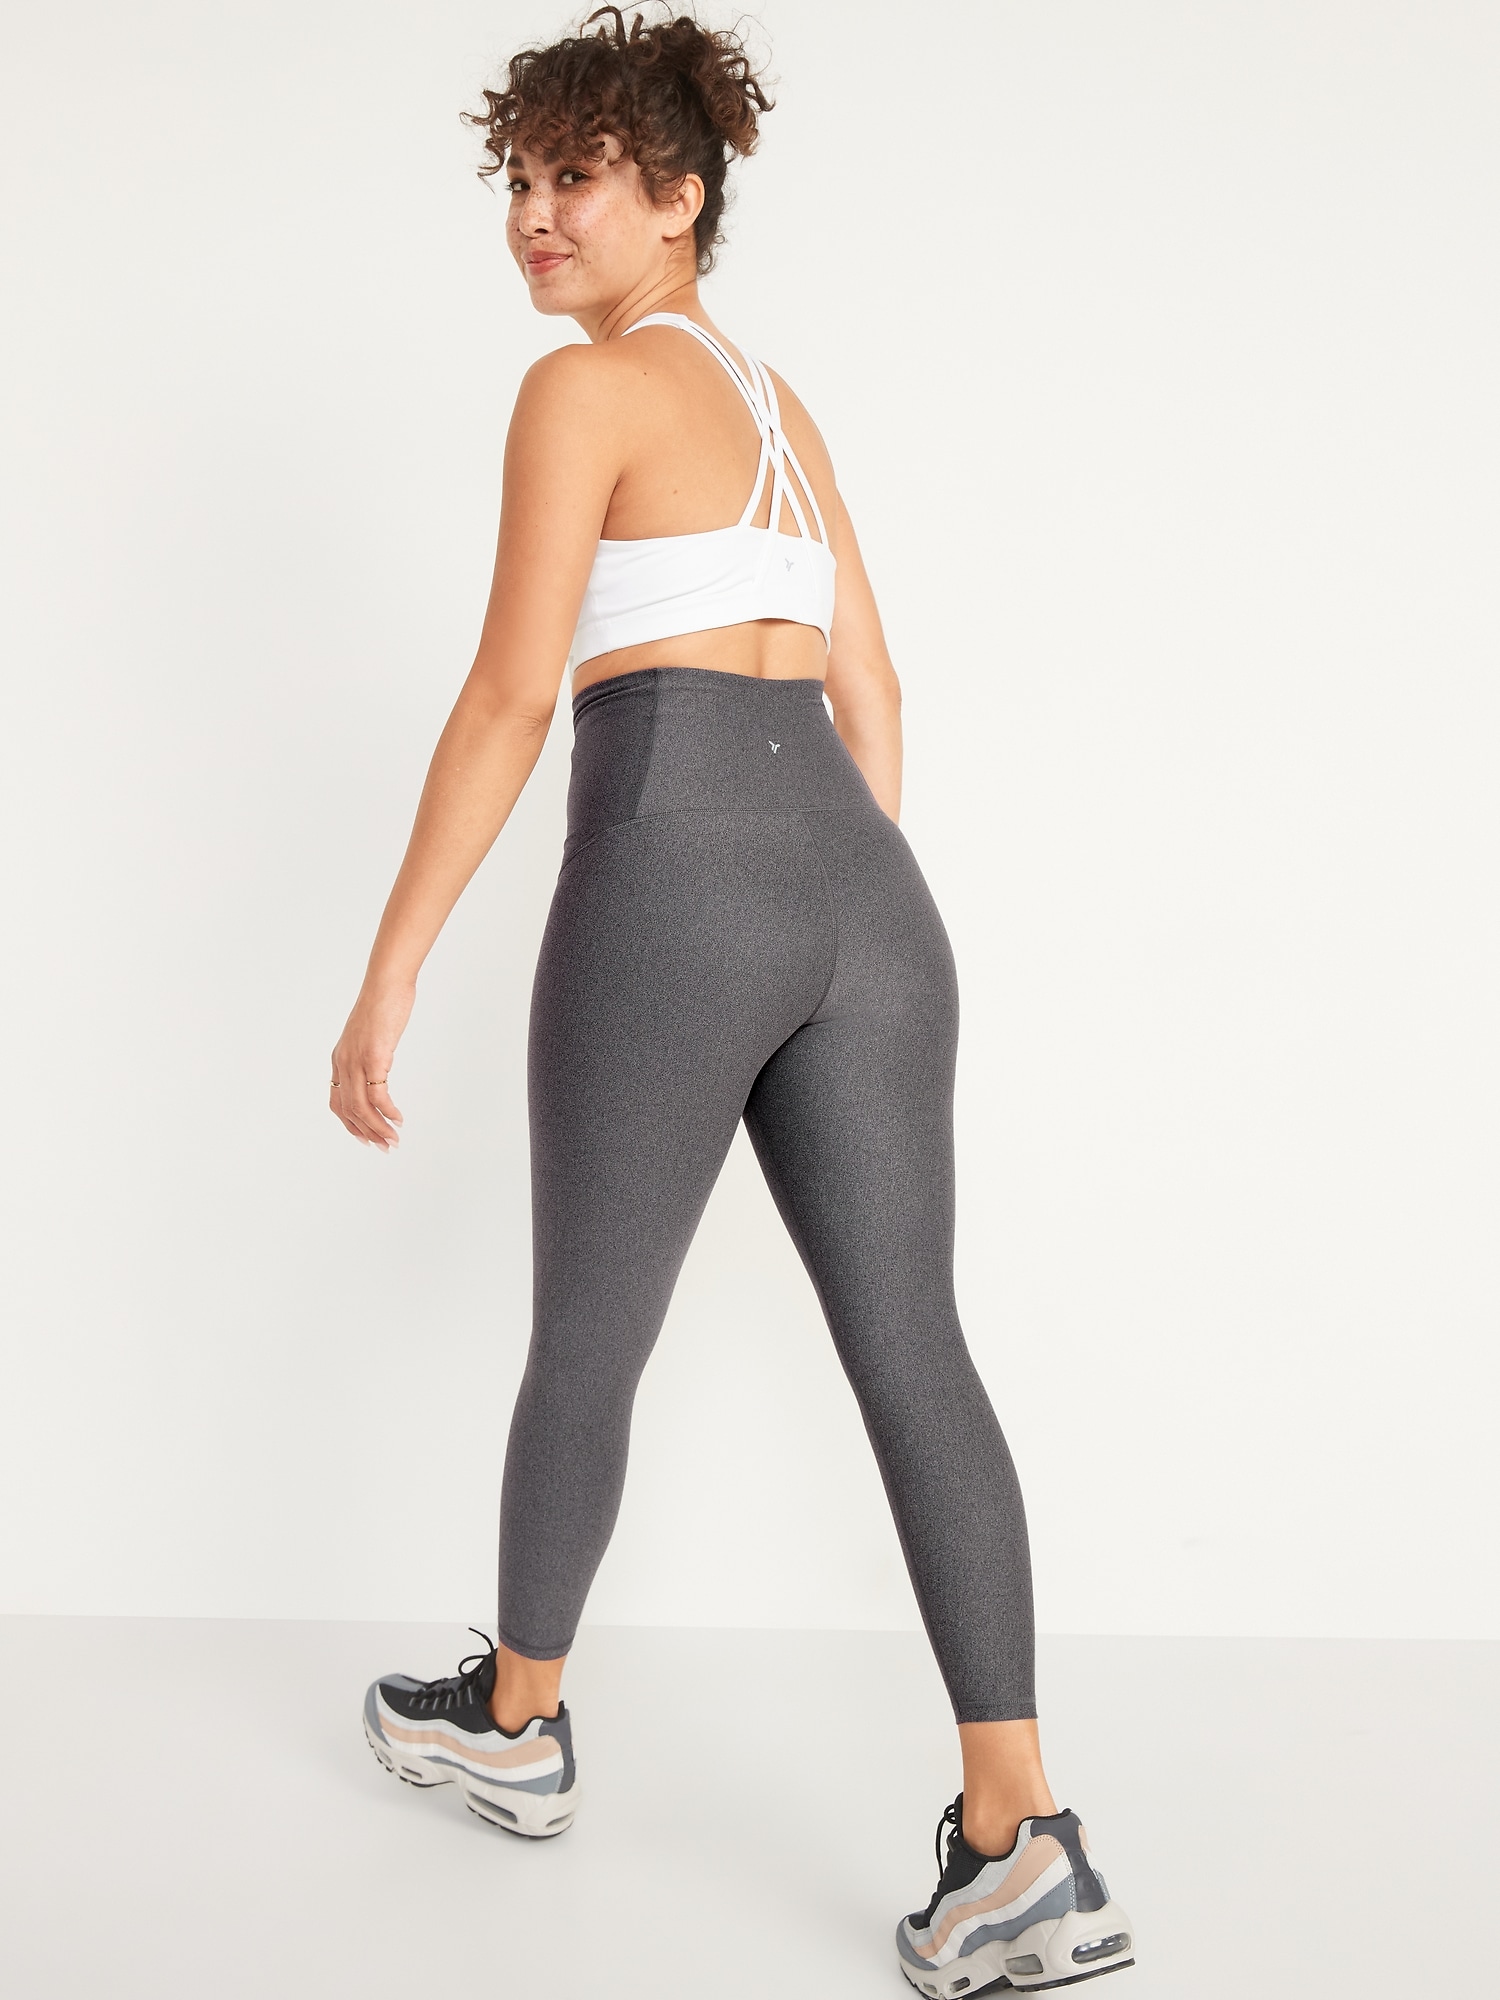  High Waist Compression Leggings For Women Tummy Control  Postpartum Leggings Seamless Yoga Workout Pants Olive XL